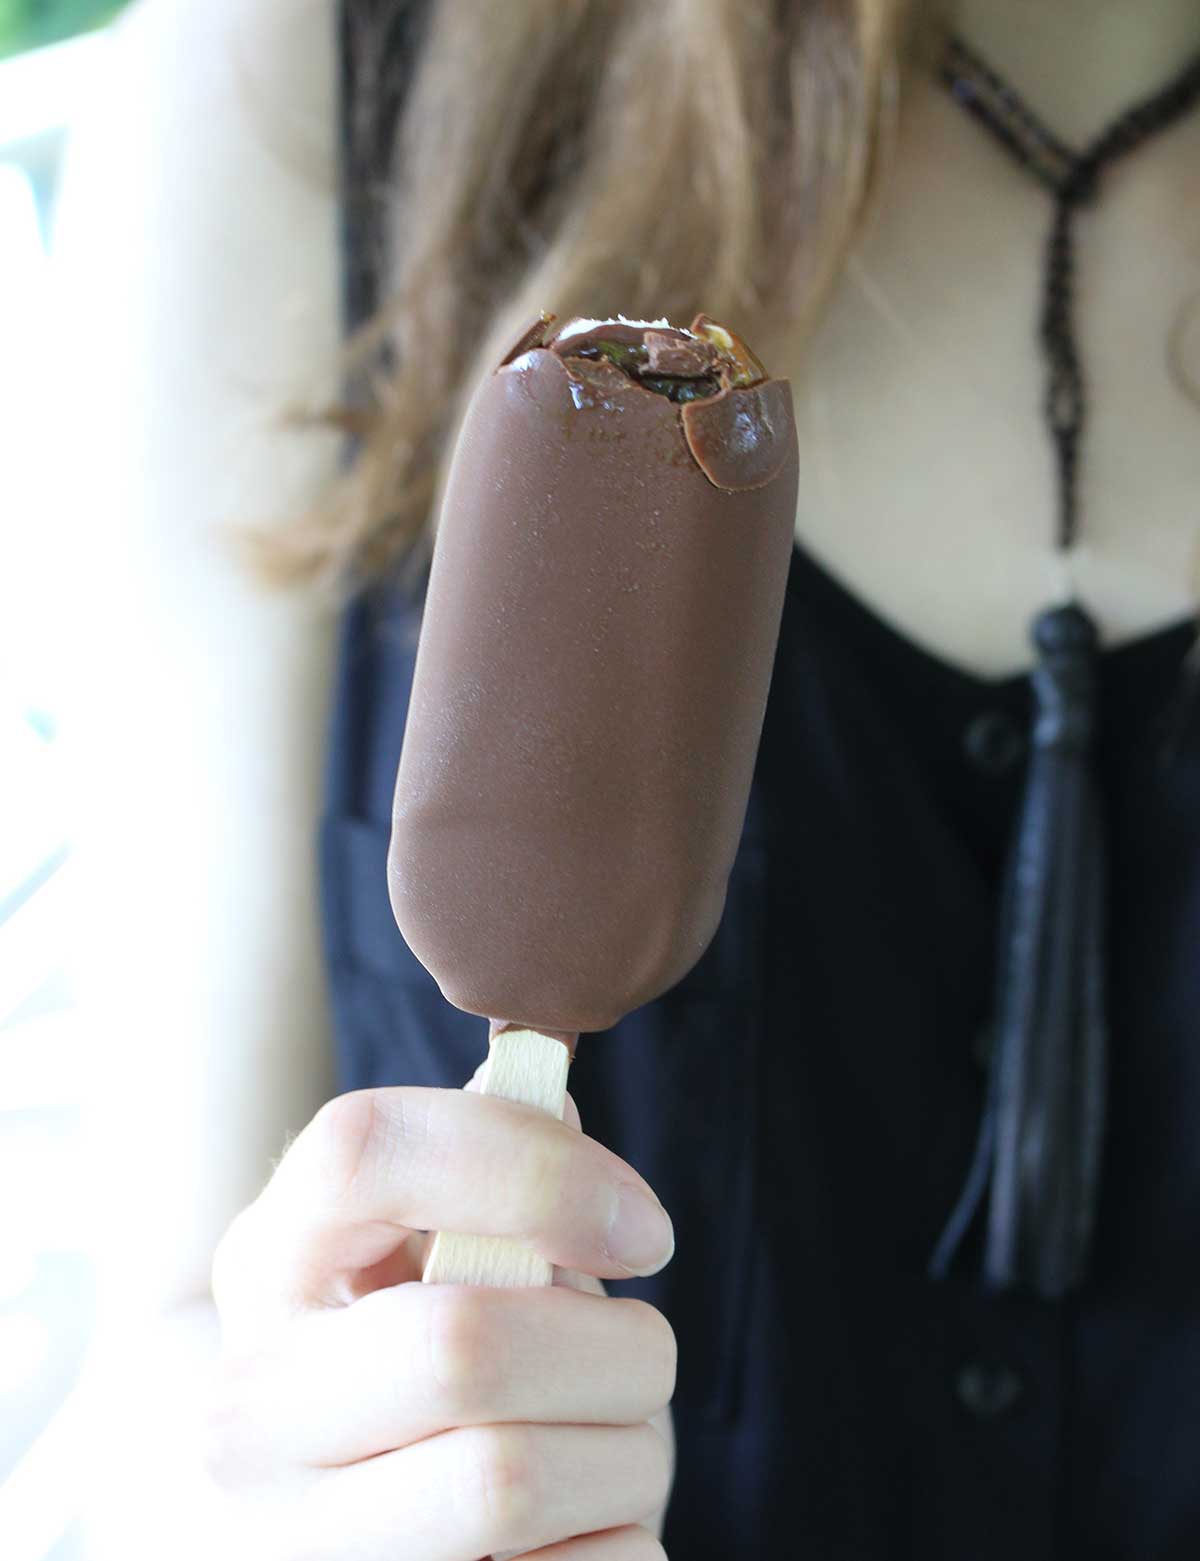 magnum-doubledipped-chocolate-caramel-ice-cream